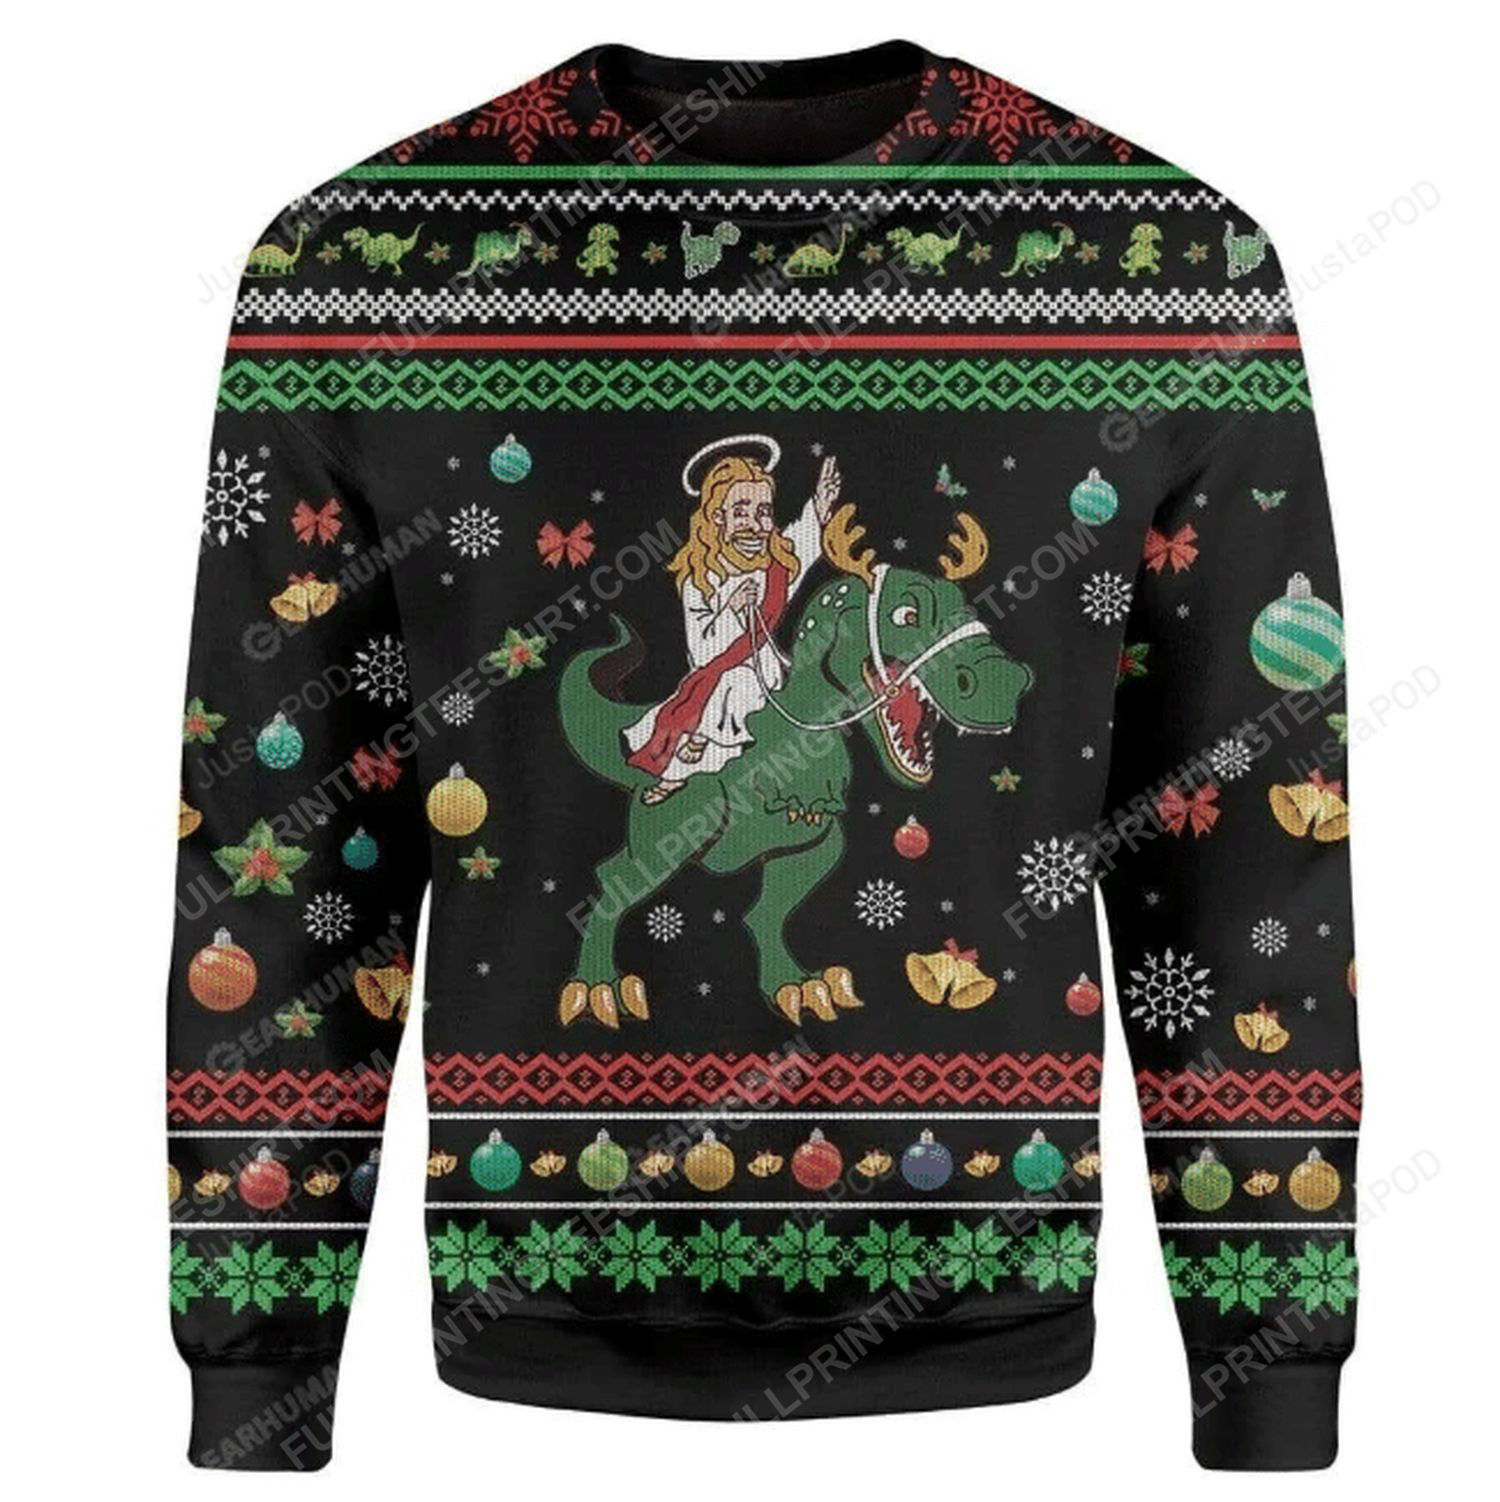 Jesus riding a dinosaur full print ugly christmas sweater